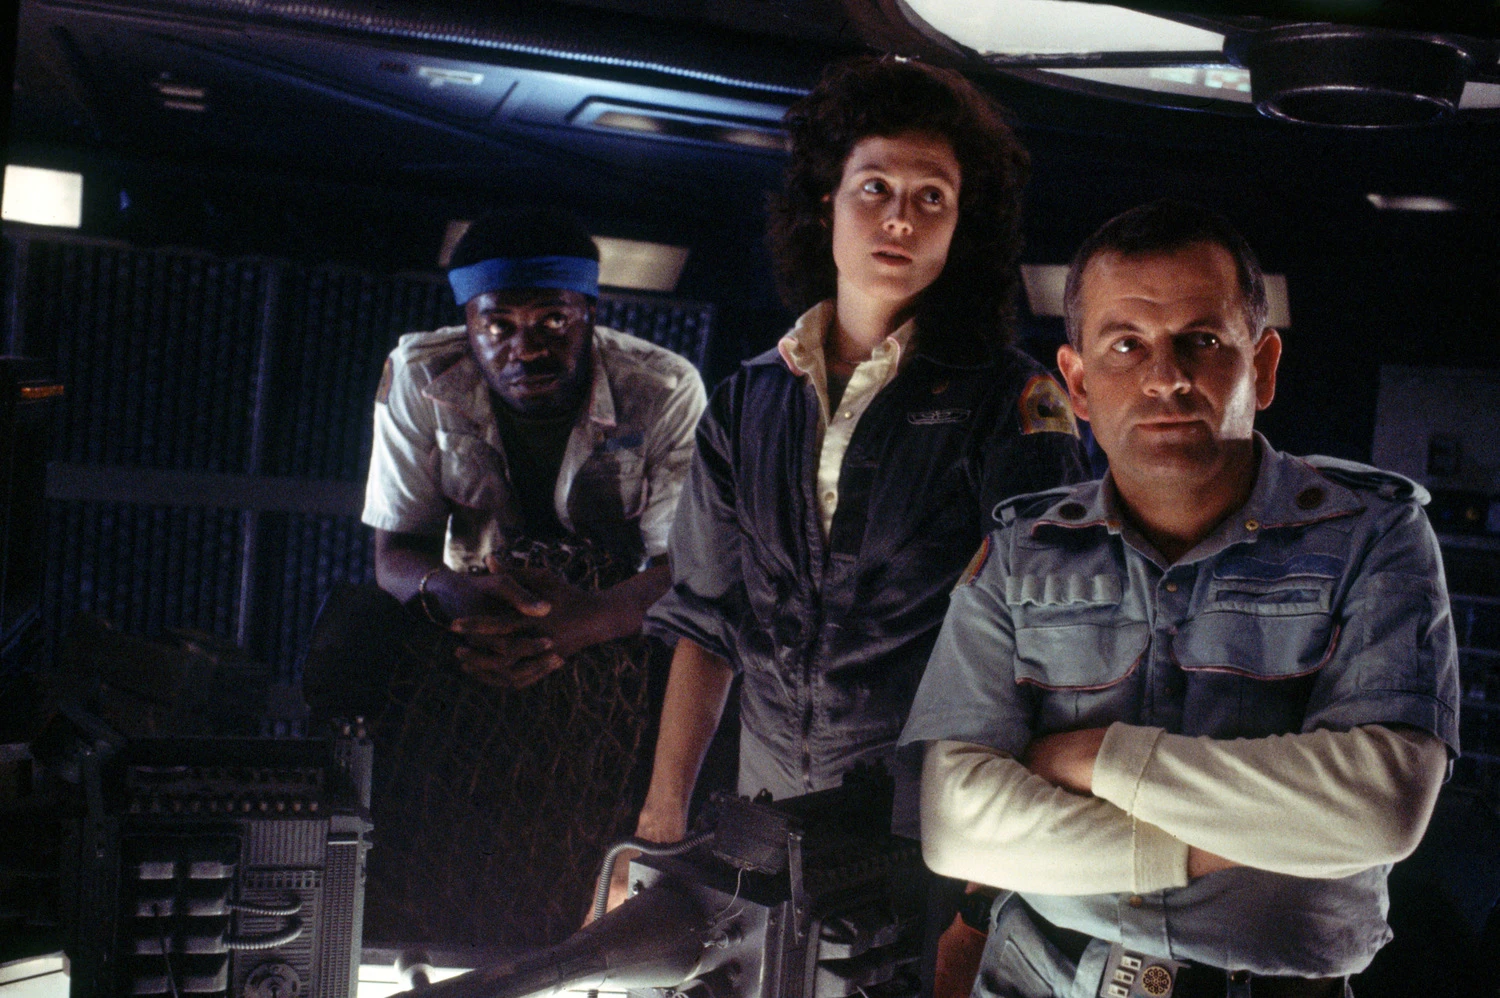 Yaphet Kotto as Parker, Sigourney Weaver as Ripley, and Ian Holm as Ash